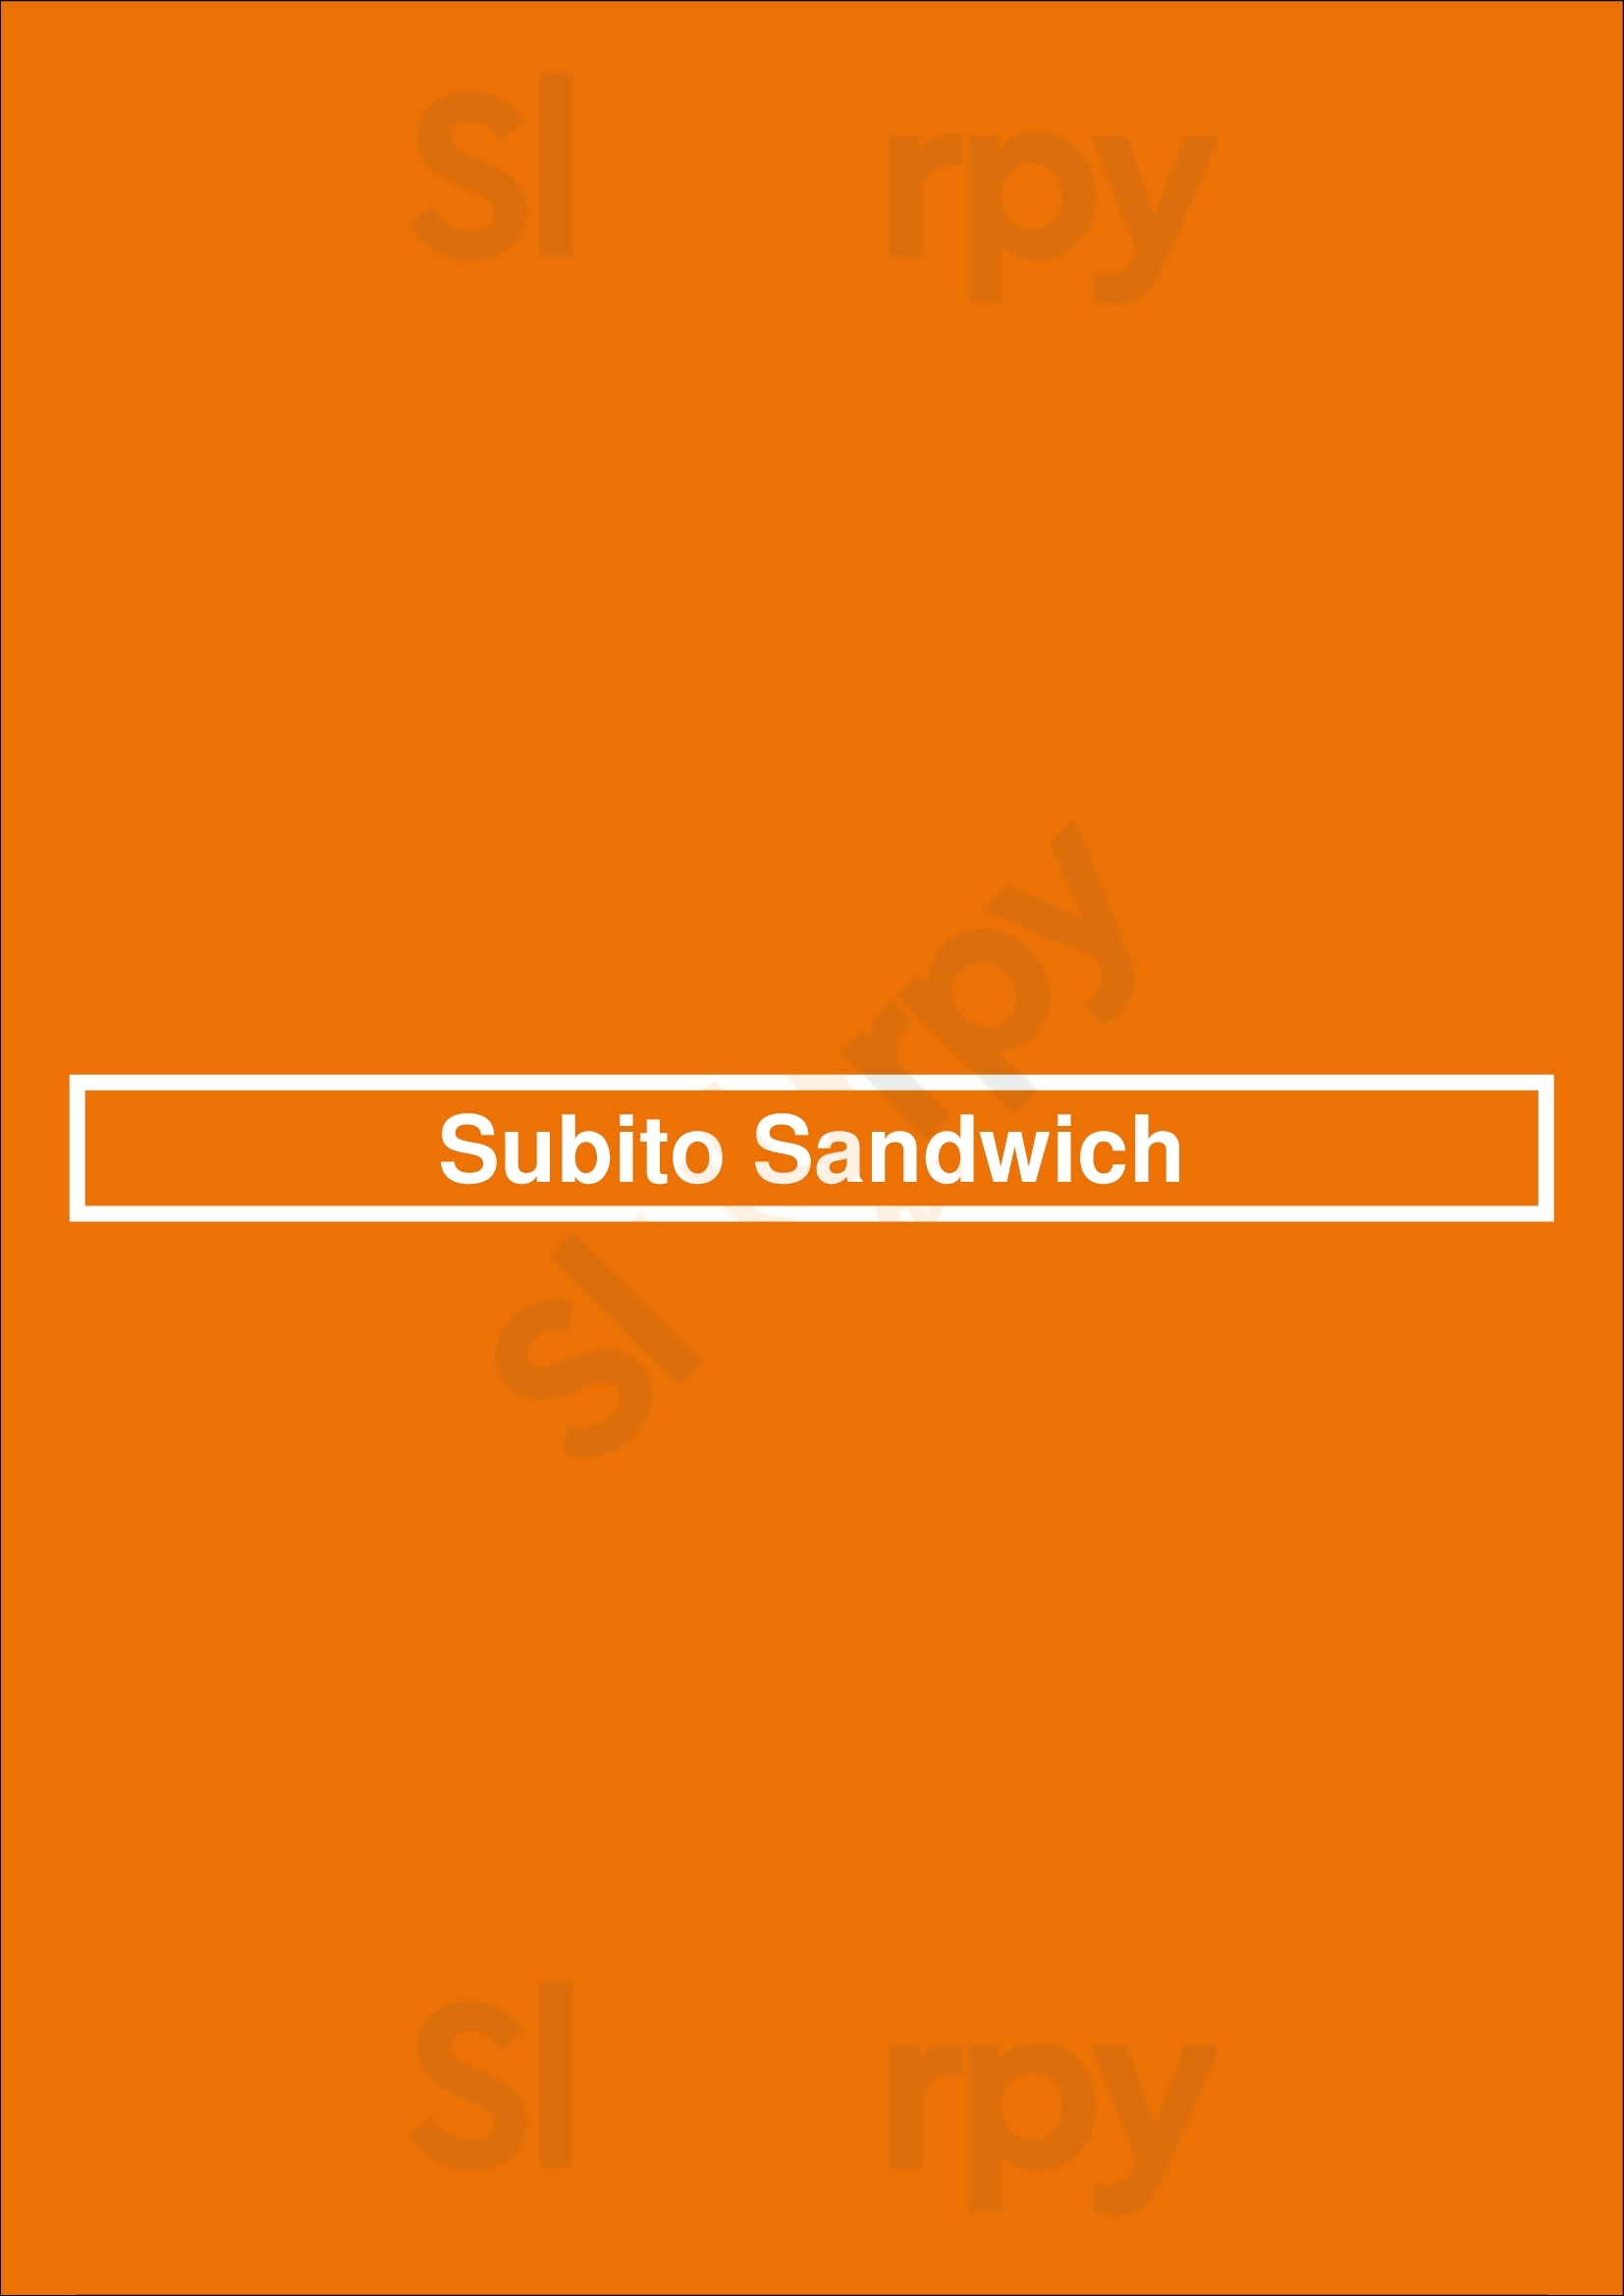 Subito Sandwich Ottawa Menu - 1